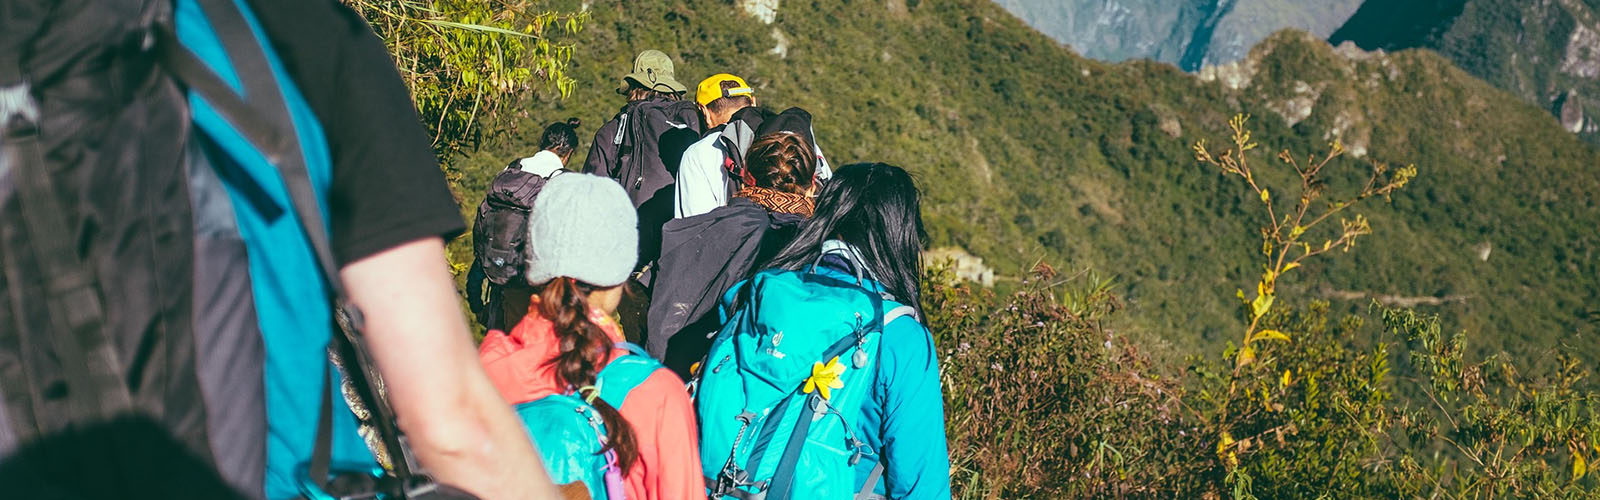 What to Wear Hiking for Beginners - Wildland Trekking